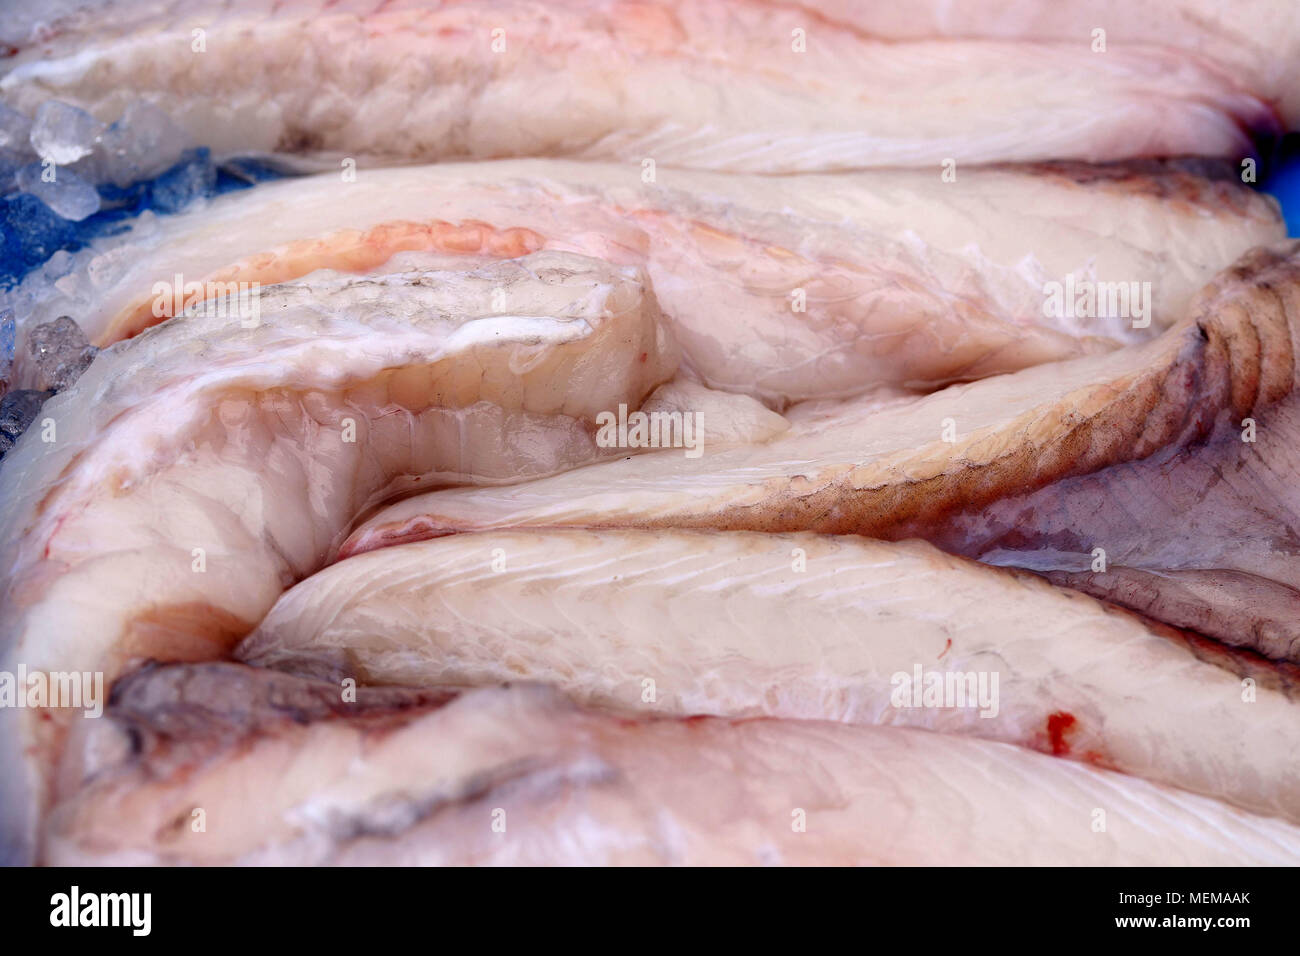 A pile of monkfish at fish market Stock Photo